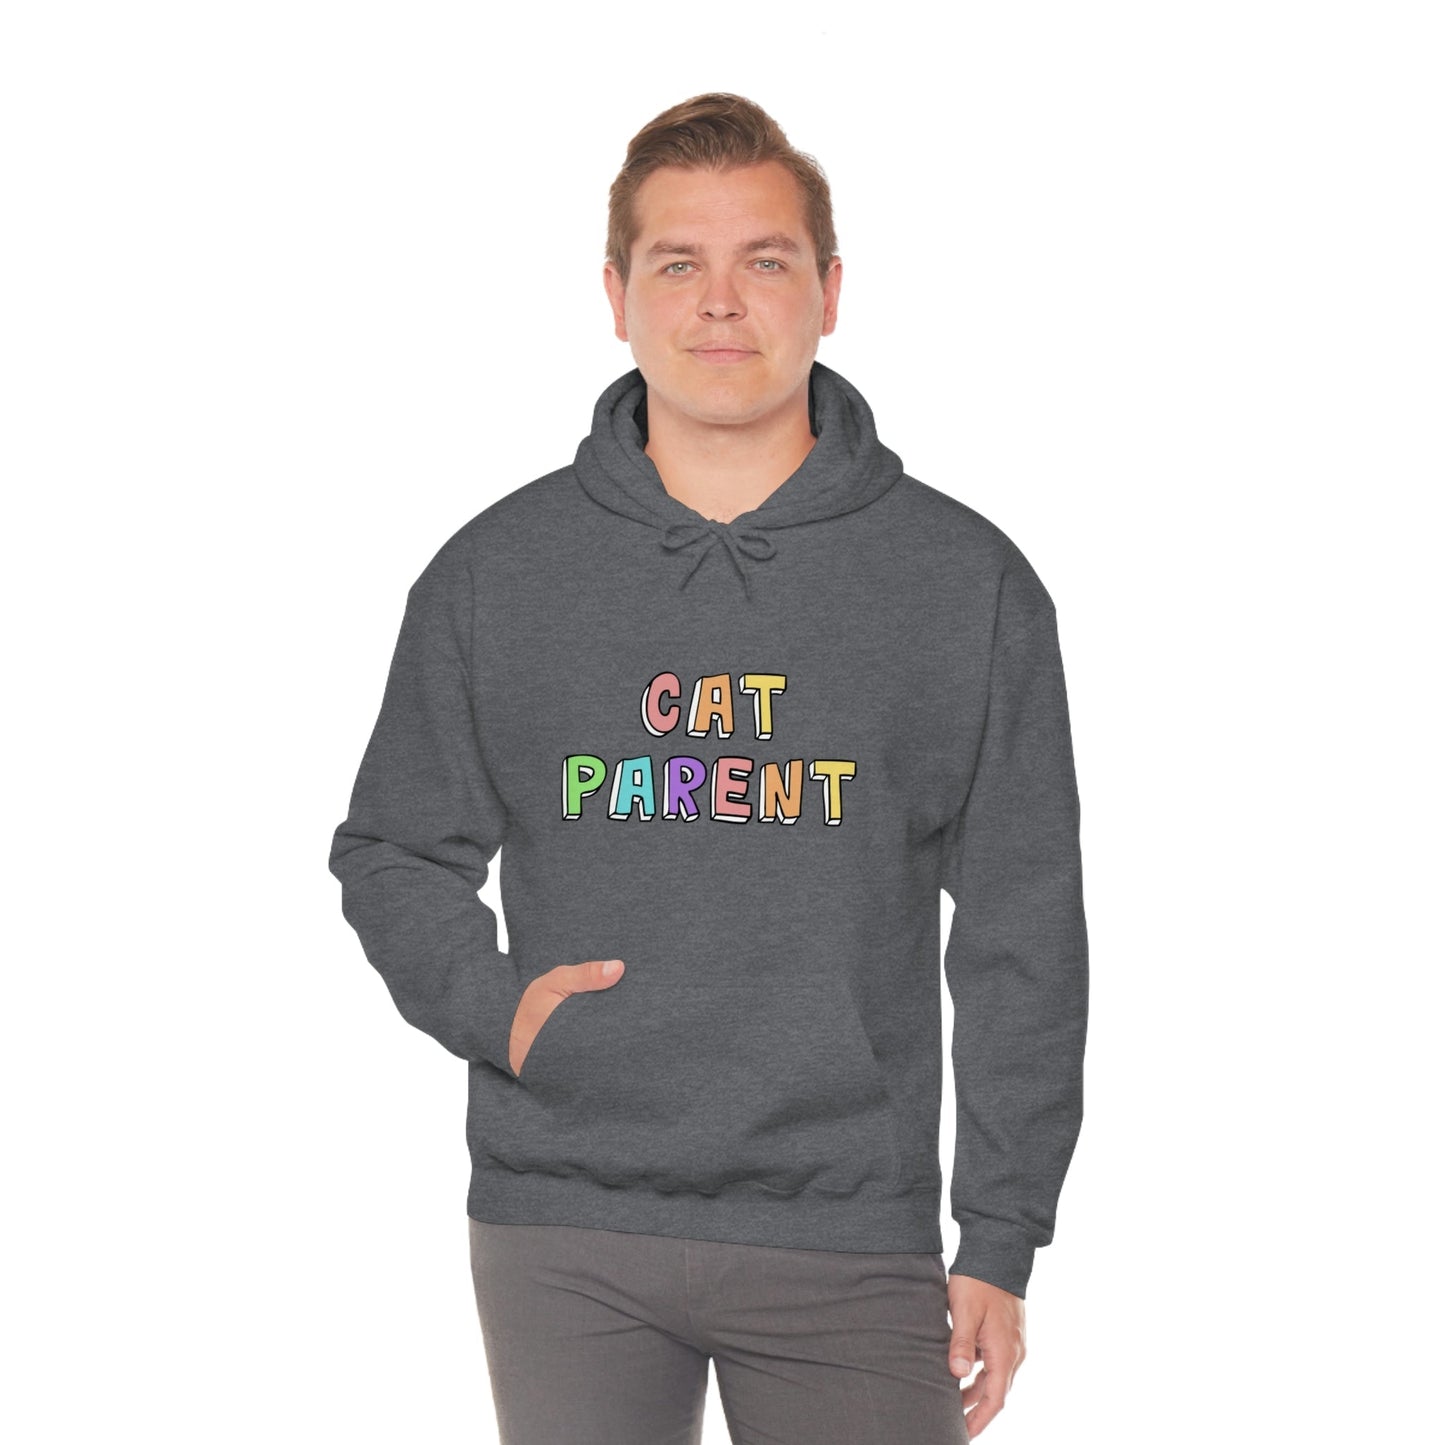 Cat Parent | Hooded Sweatshirt - Detezi Designs-29492270443799141029